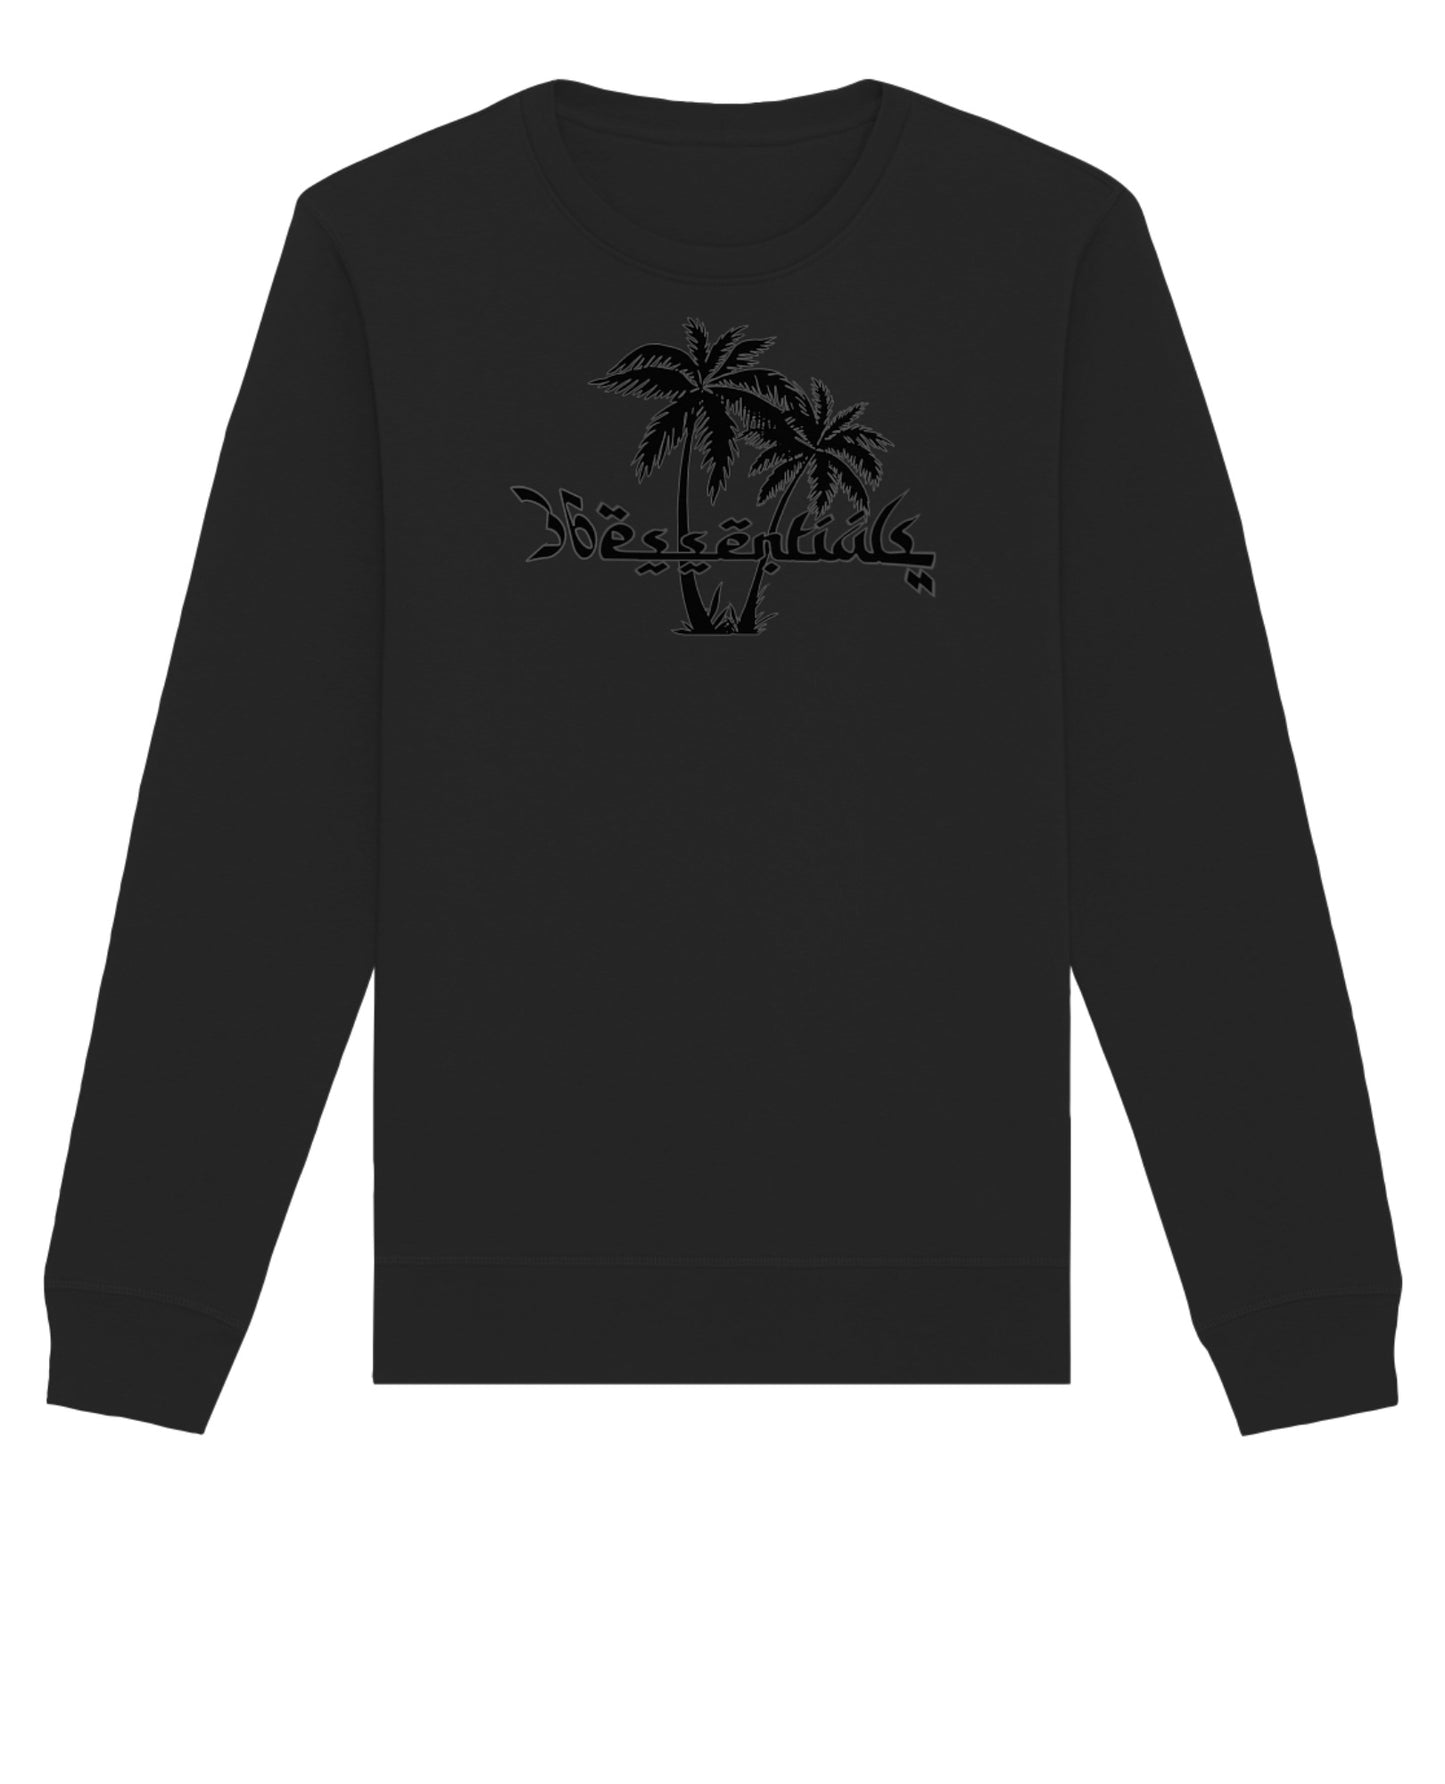 Sweater Palmen Black on Black